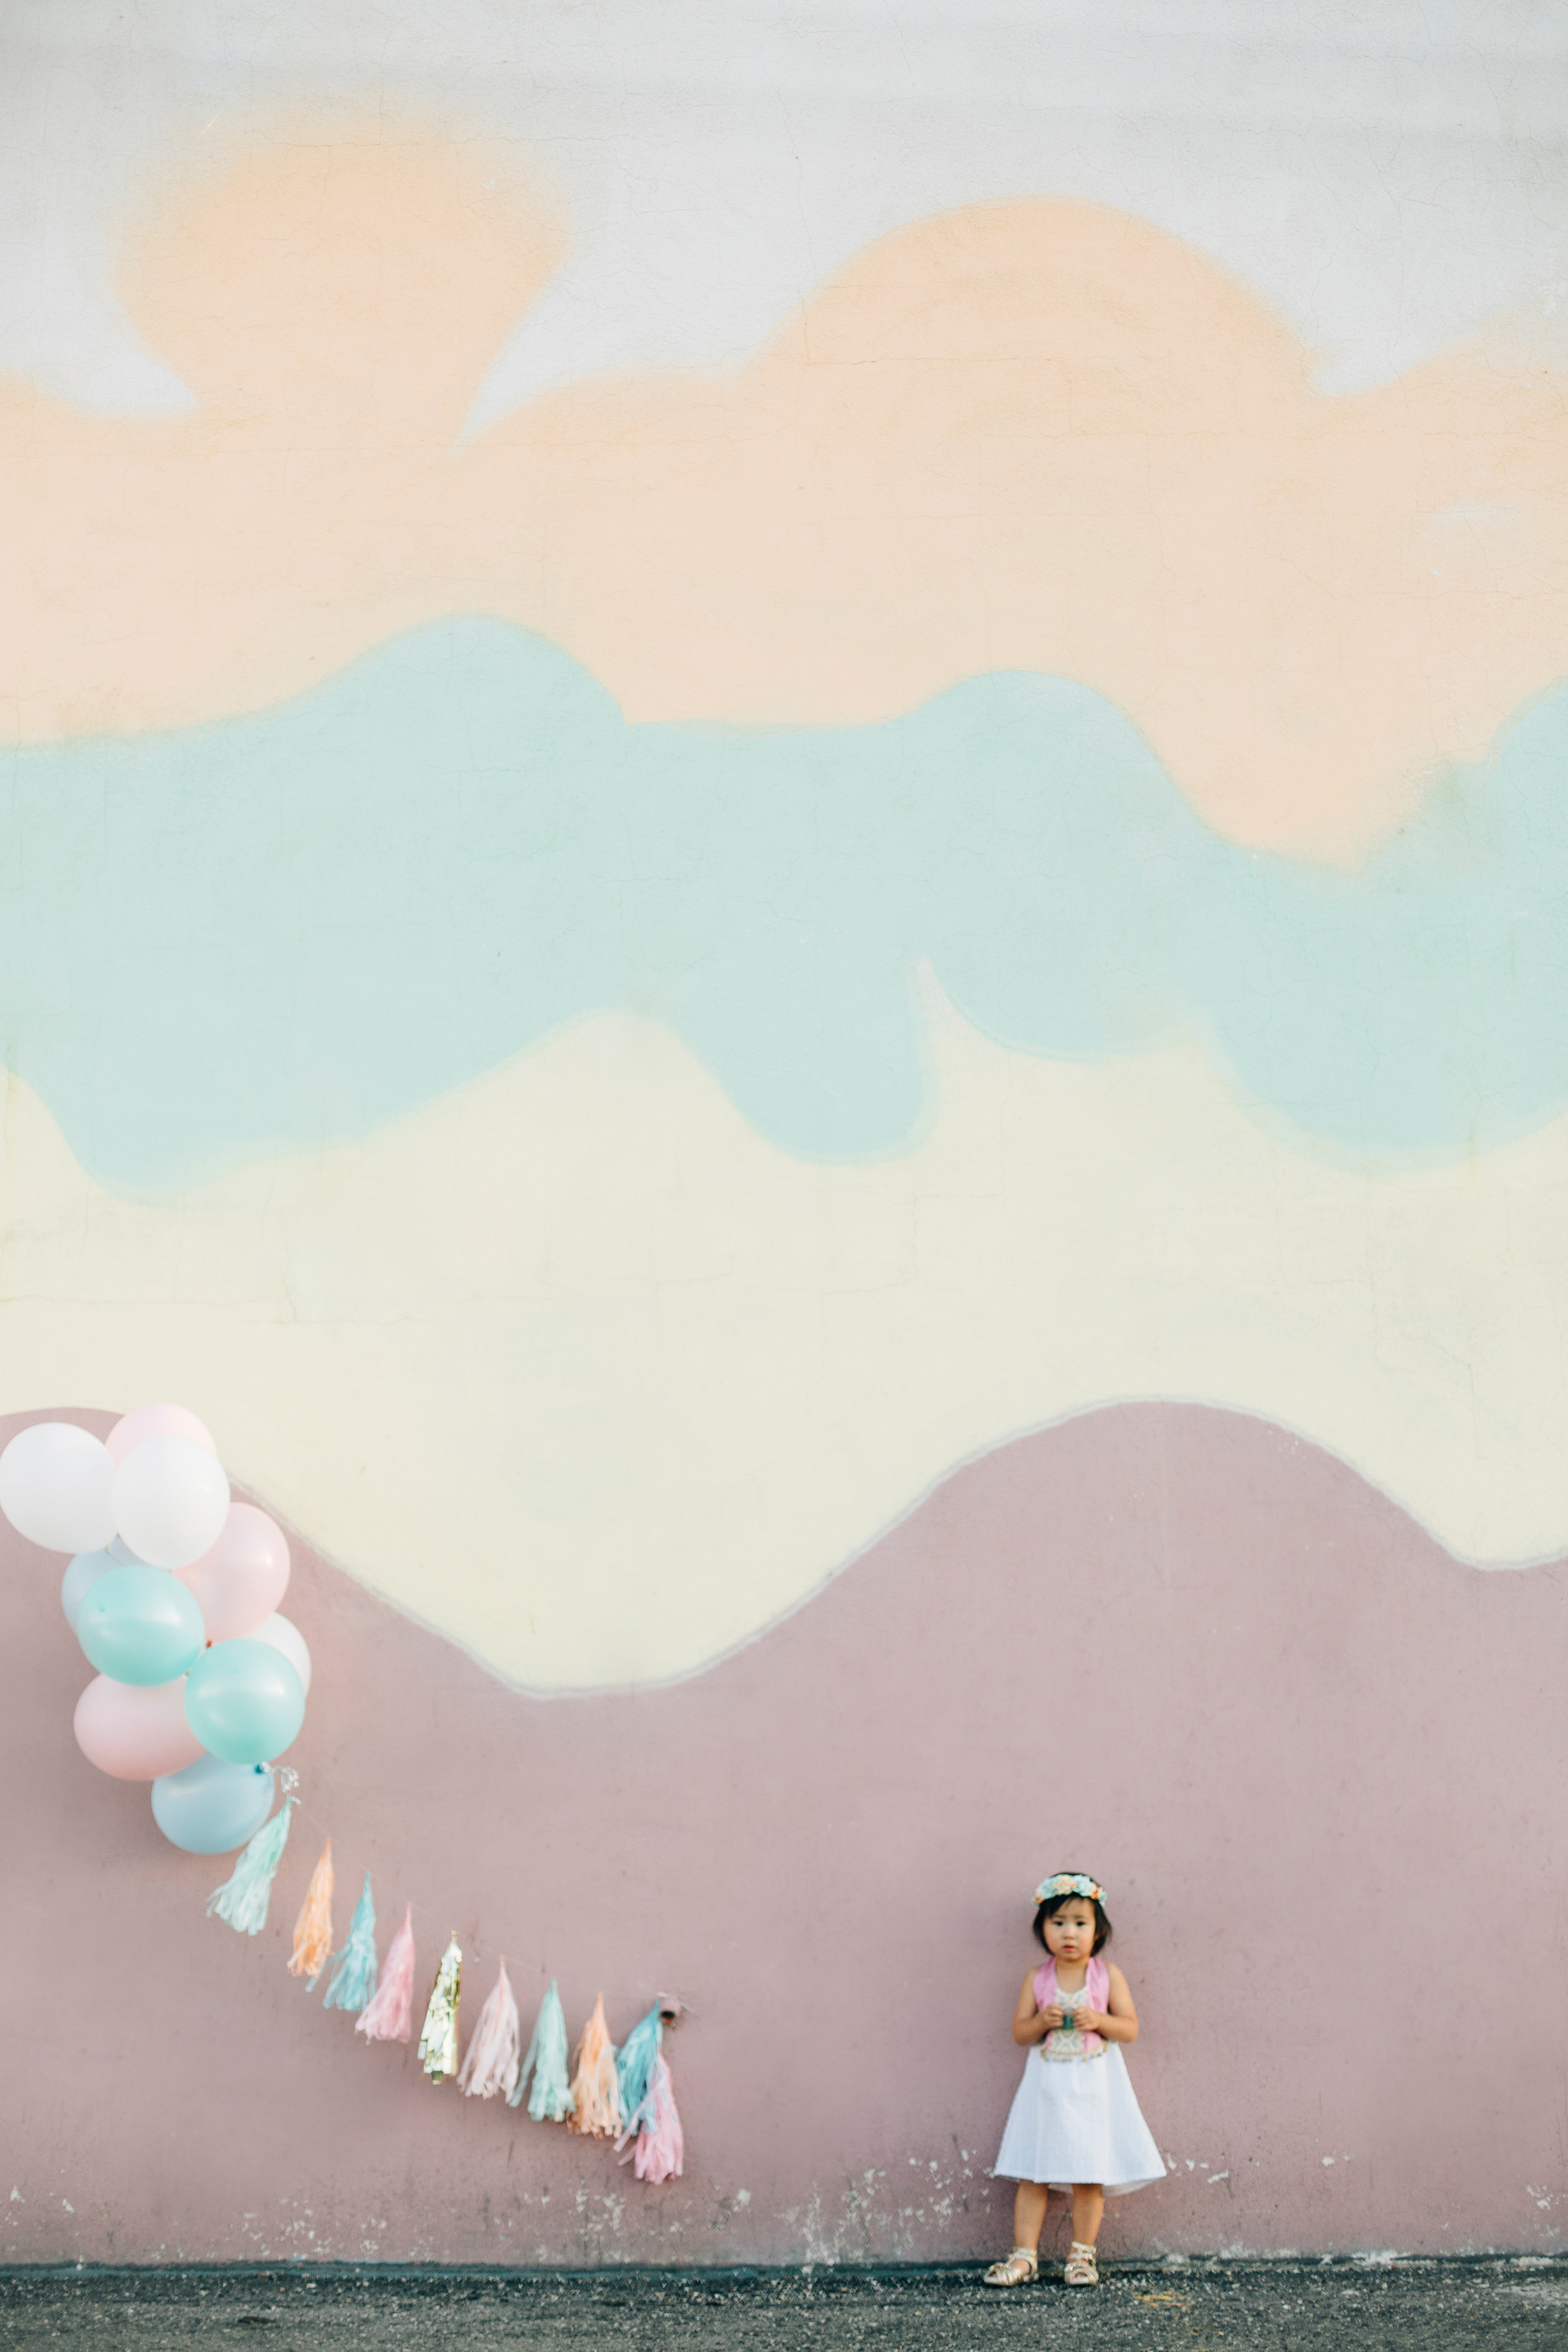 Birthday photoshoot with balloons